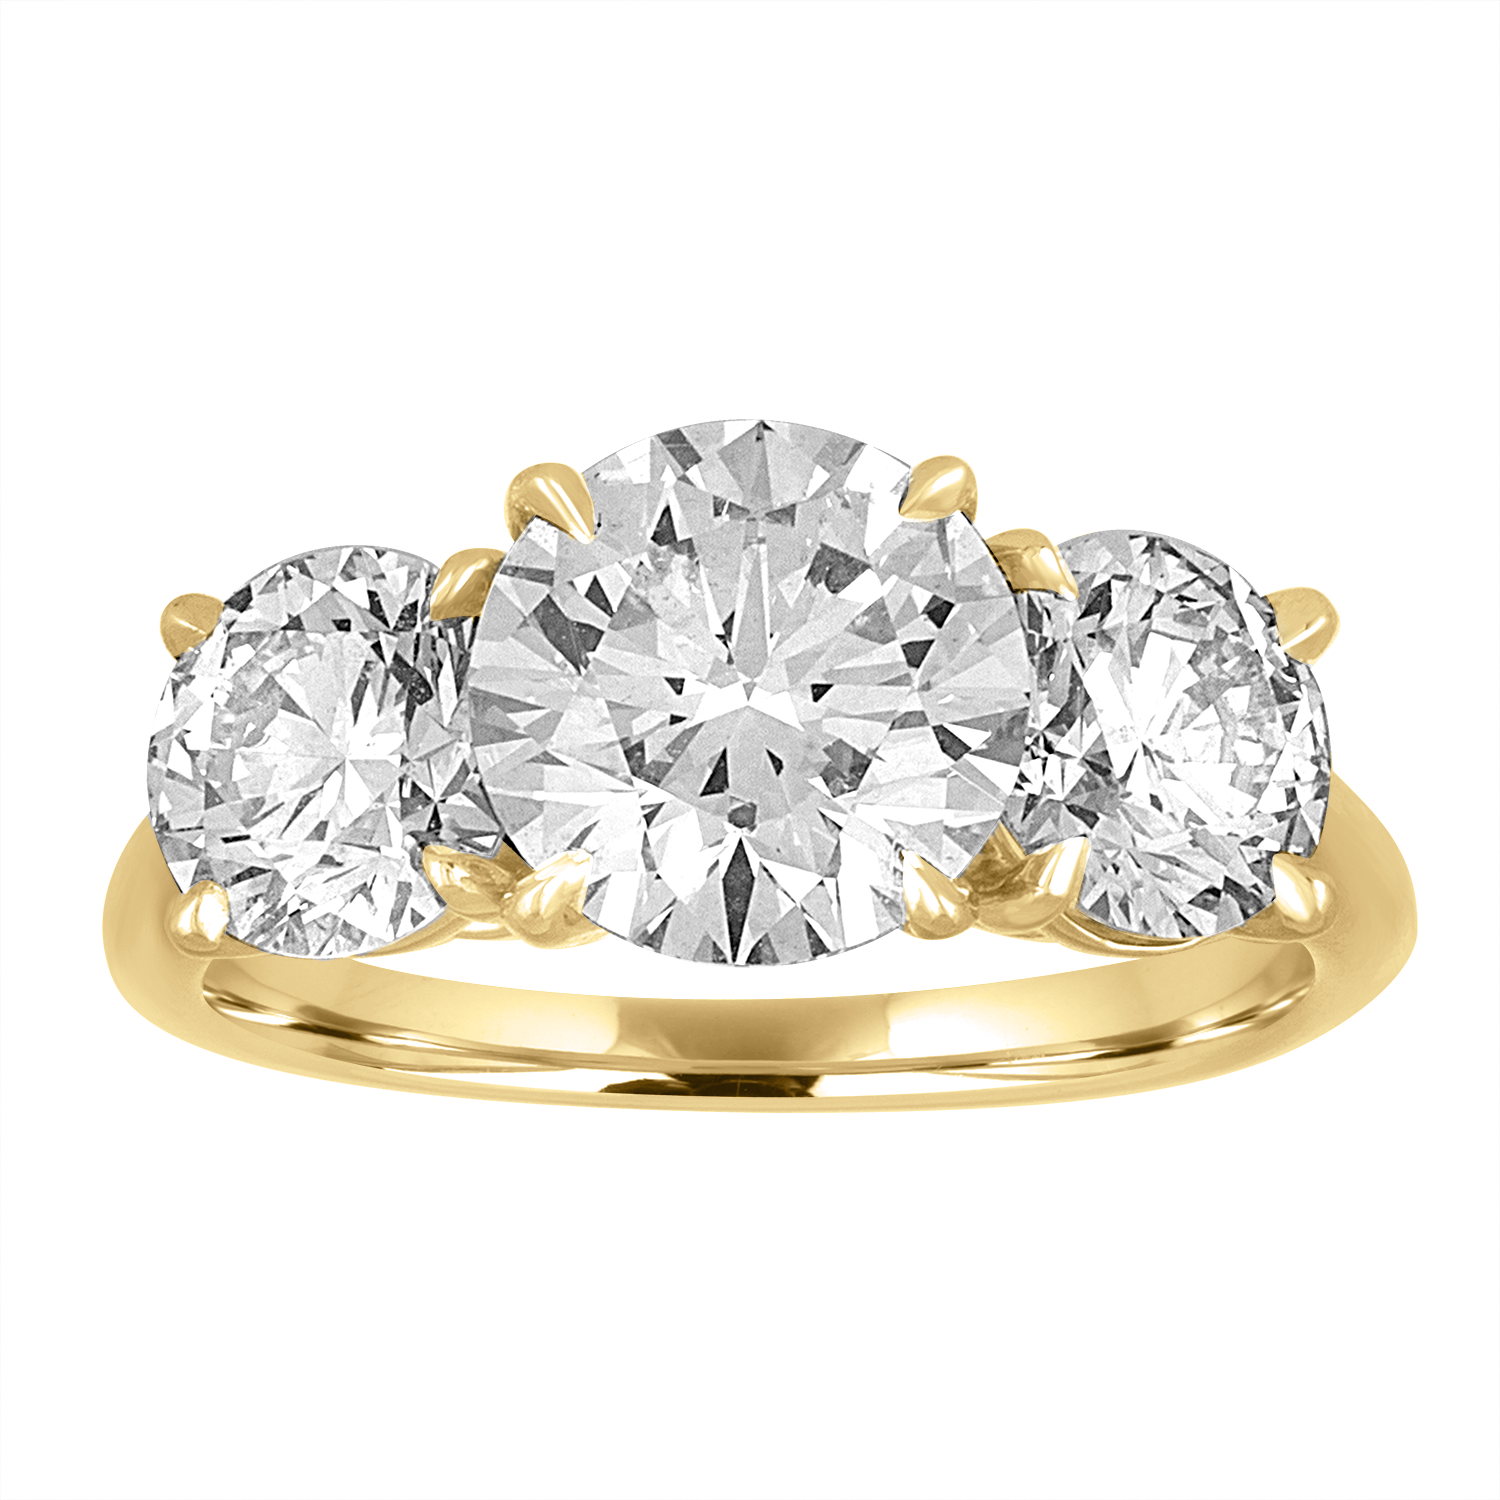 my beautiful ring 😍 : r/EngagementRings